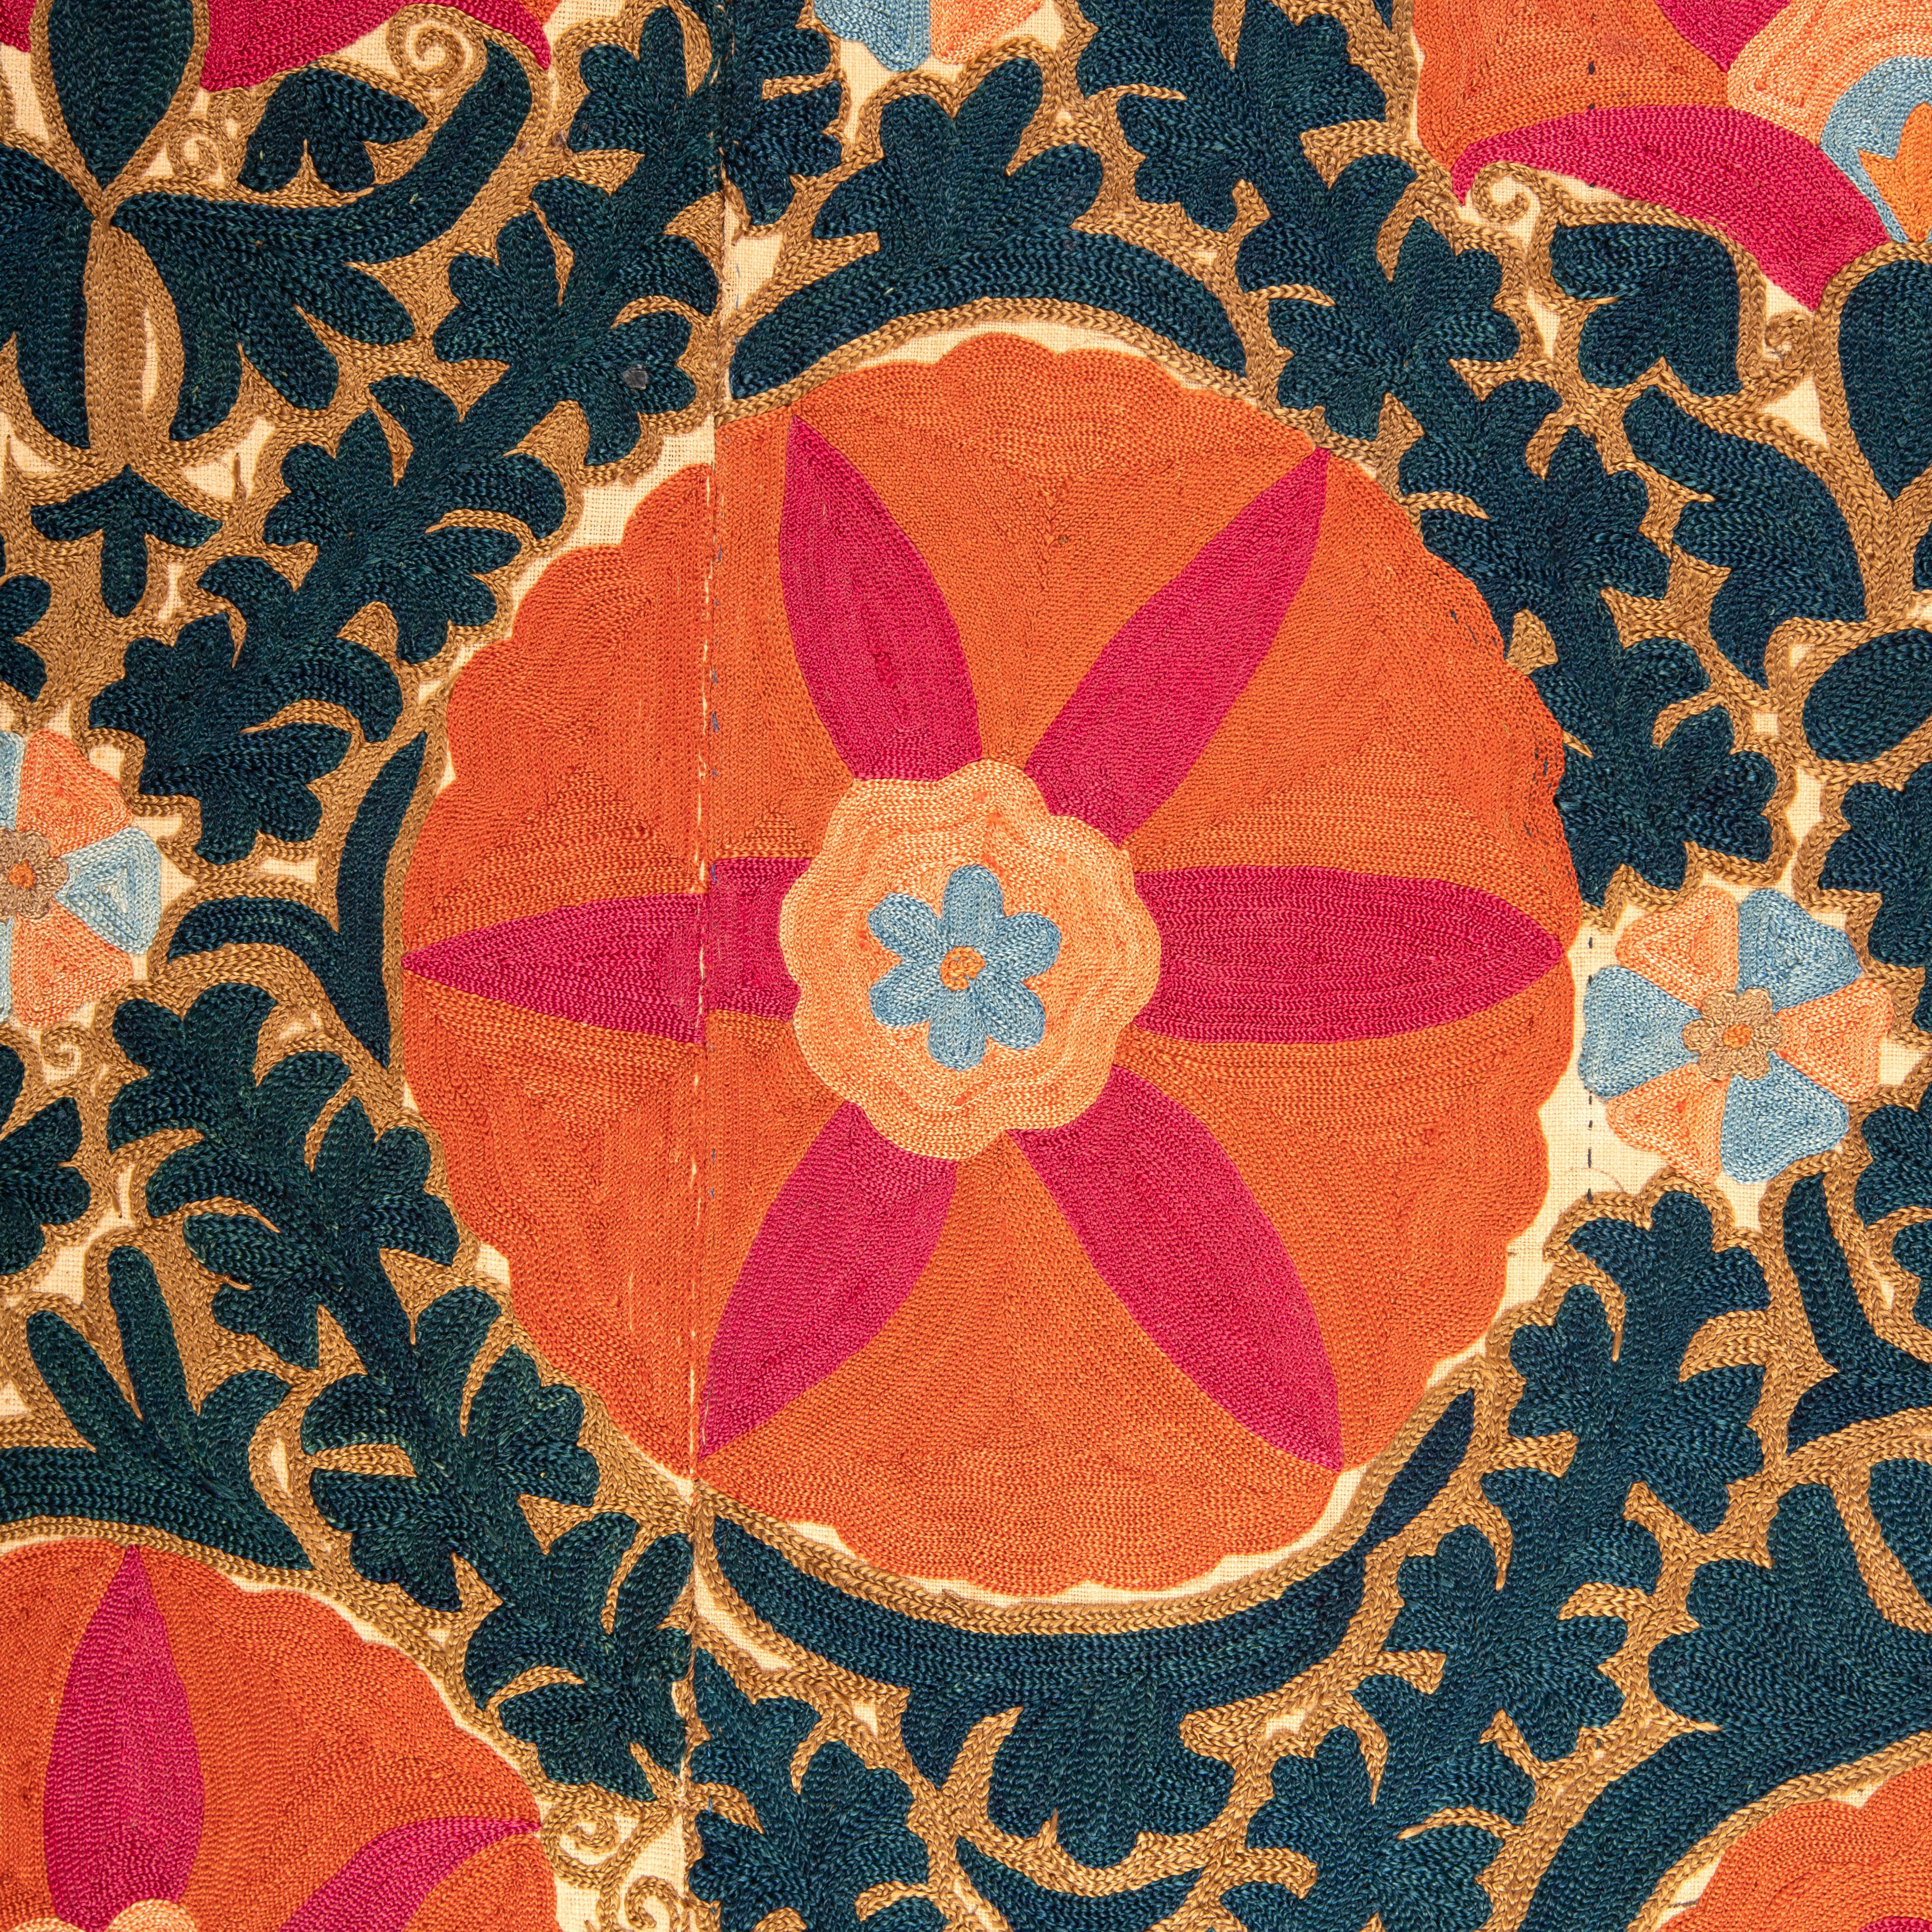 Cotton Antique Suzani from Bukhara, Uzbekistan, 19th C